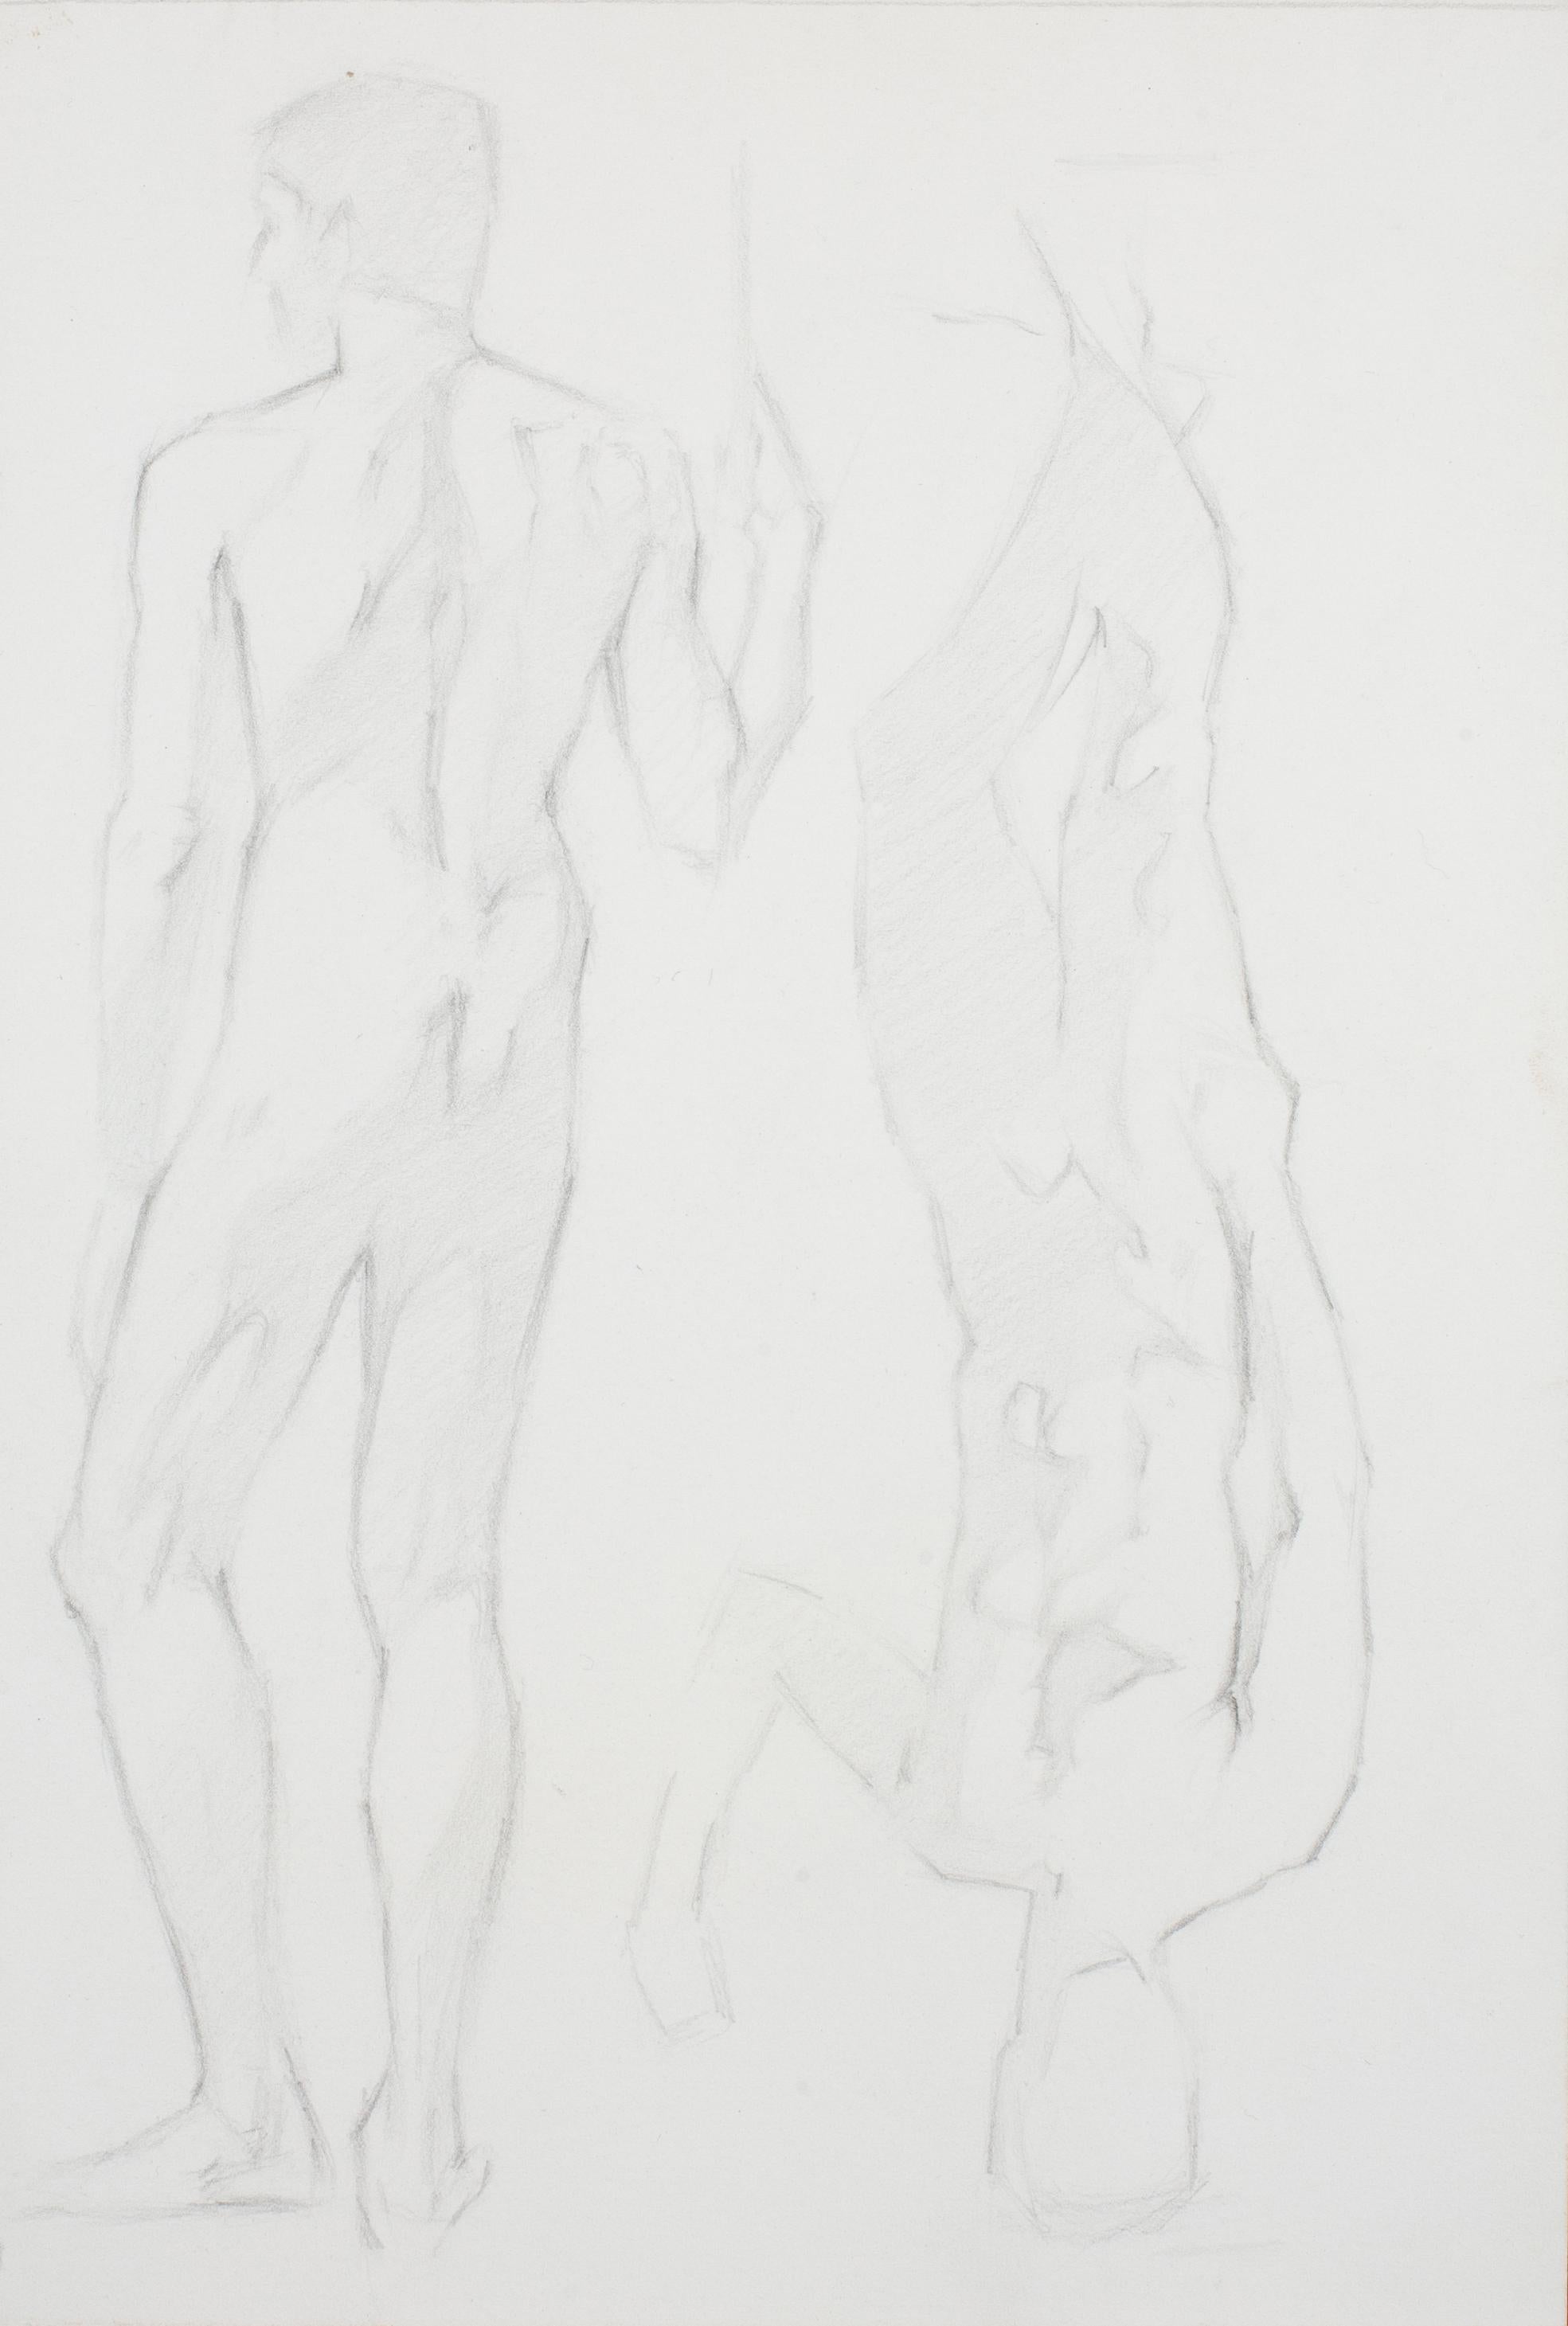 Jessica Keiser Nude - Pencil Study #1